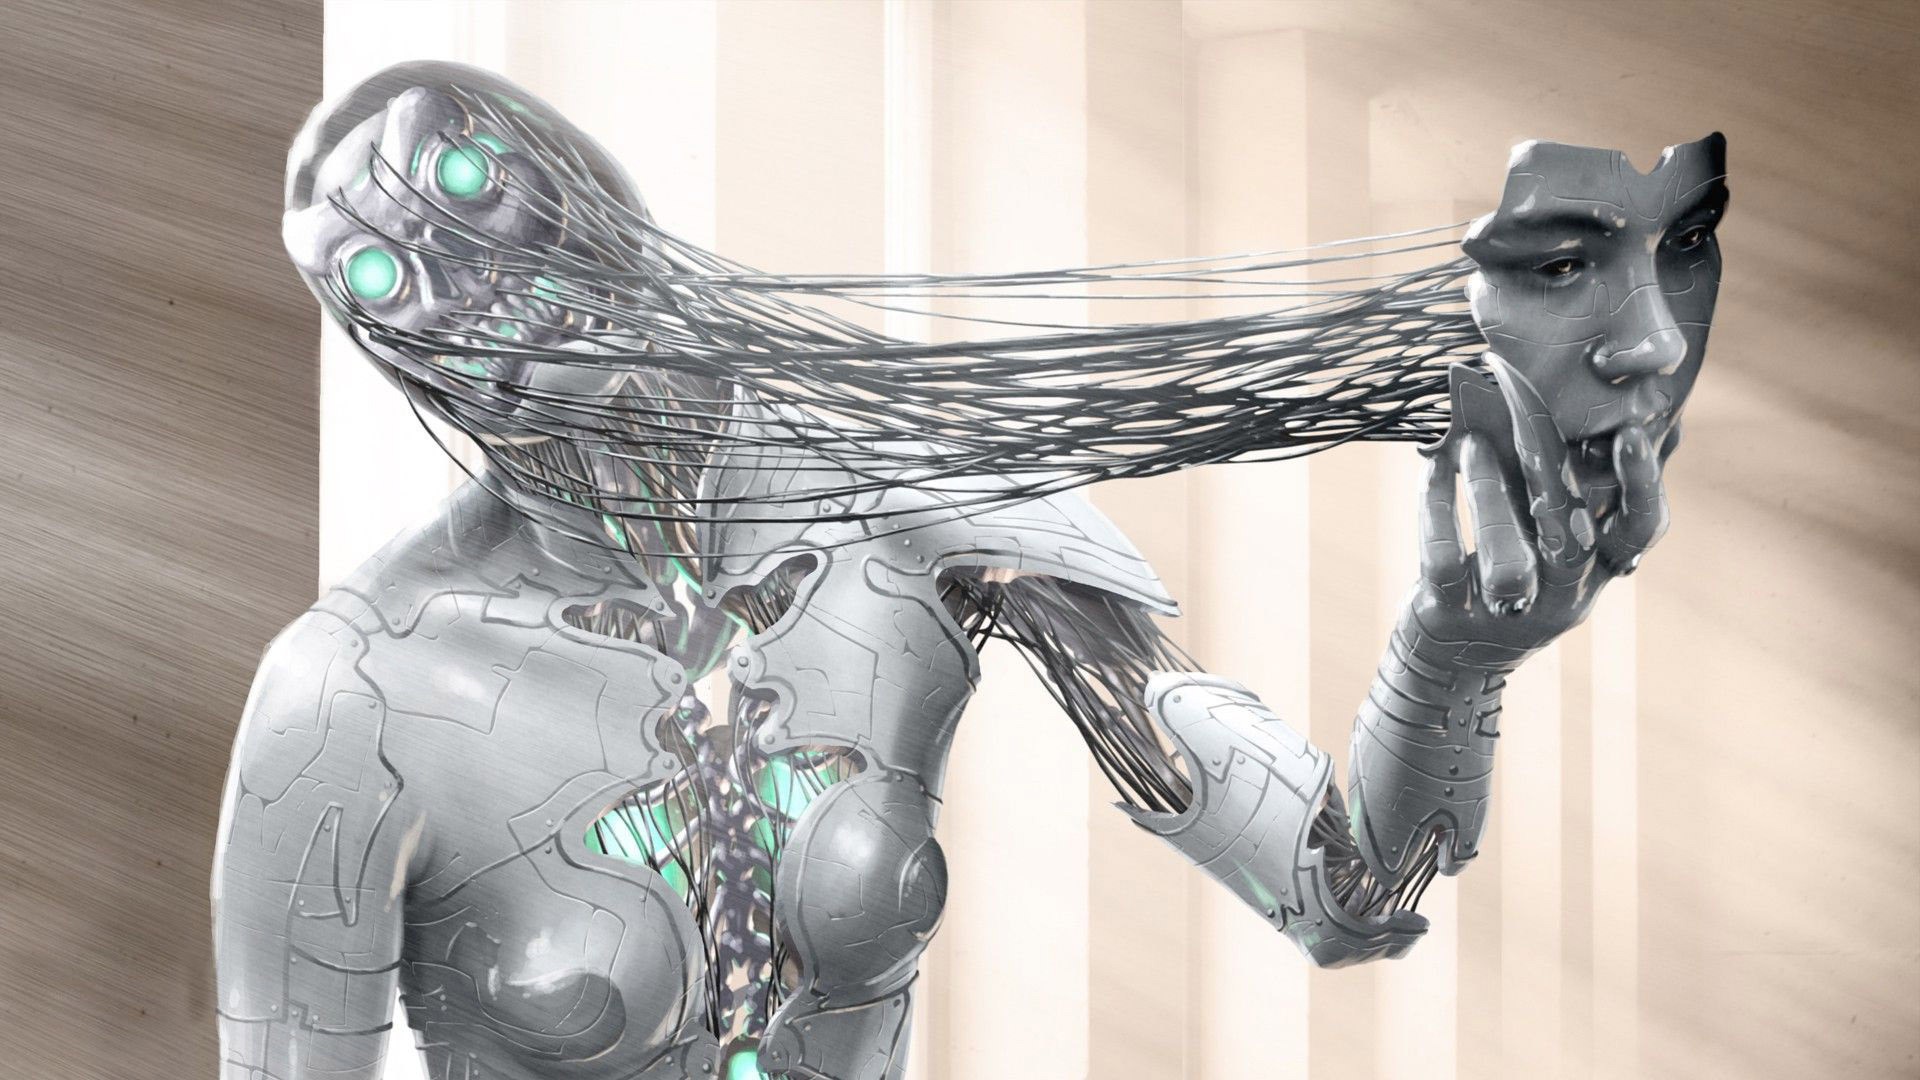 General 1920x1080 digital art women artwork face robot cyborg skull metal wires CGI cyan